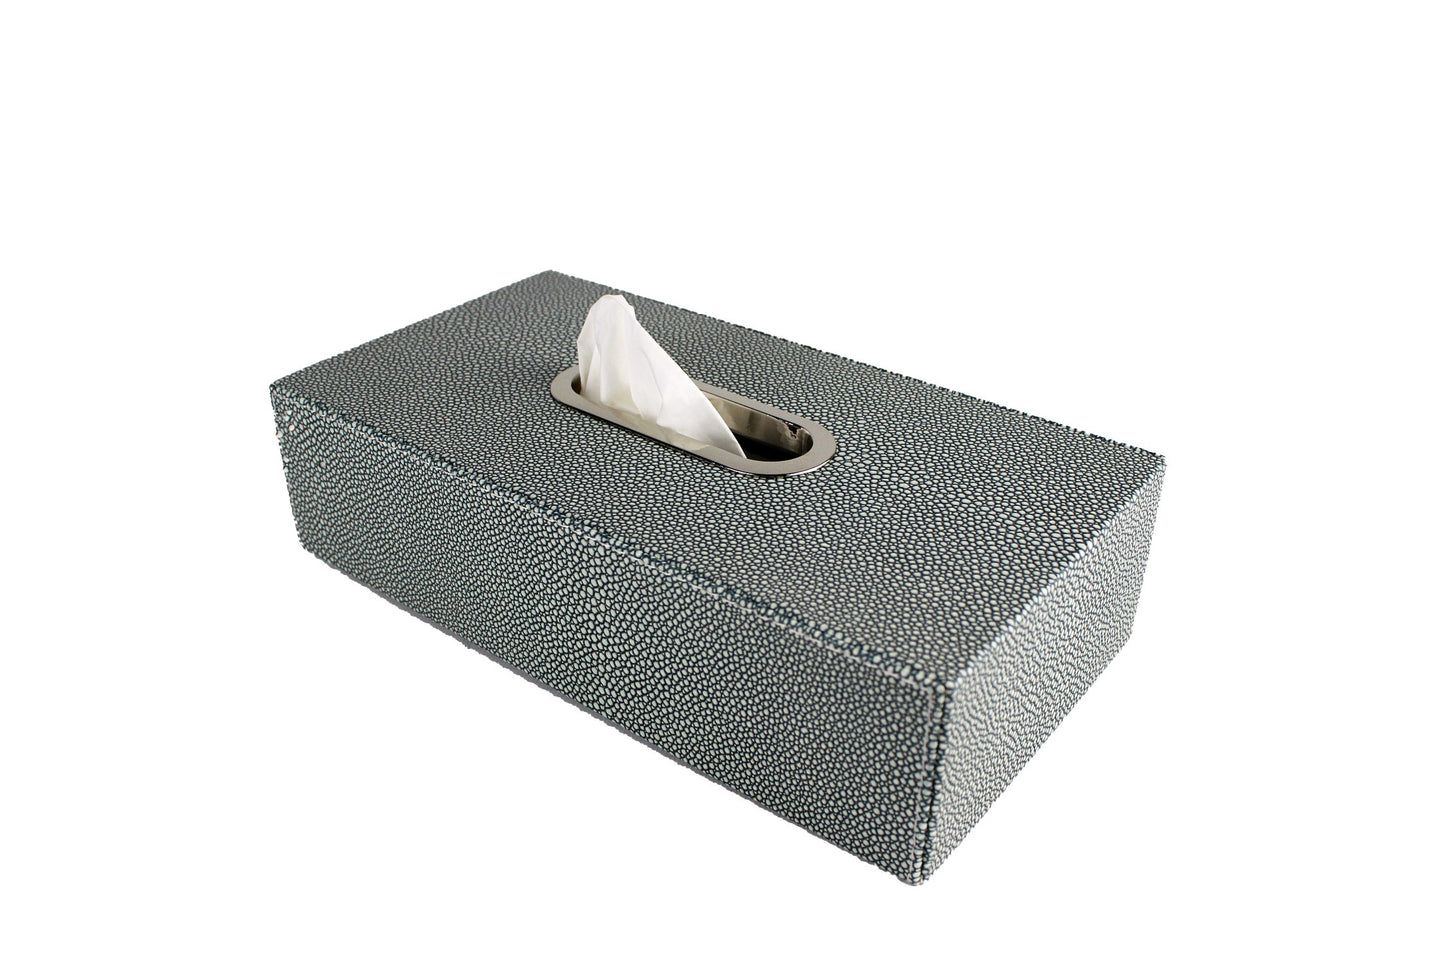 Signature tissue box with stingray look